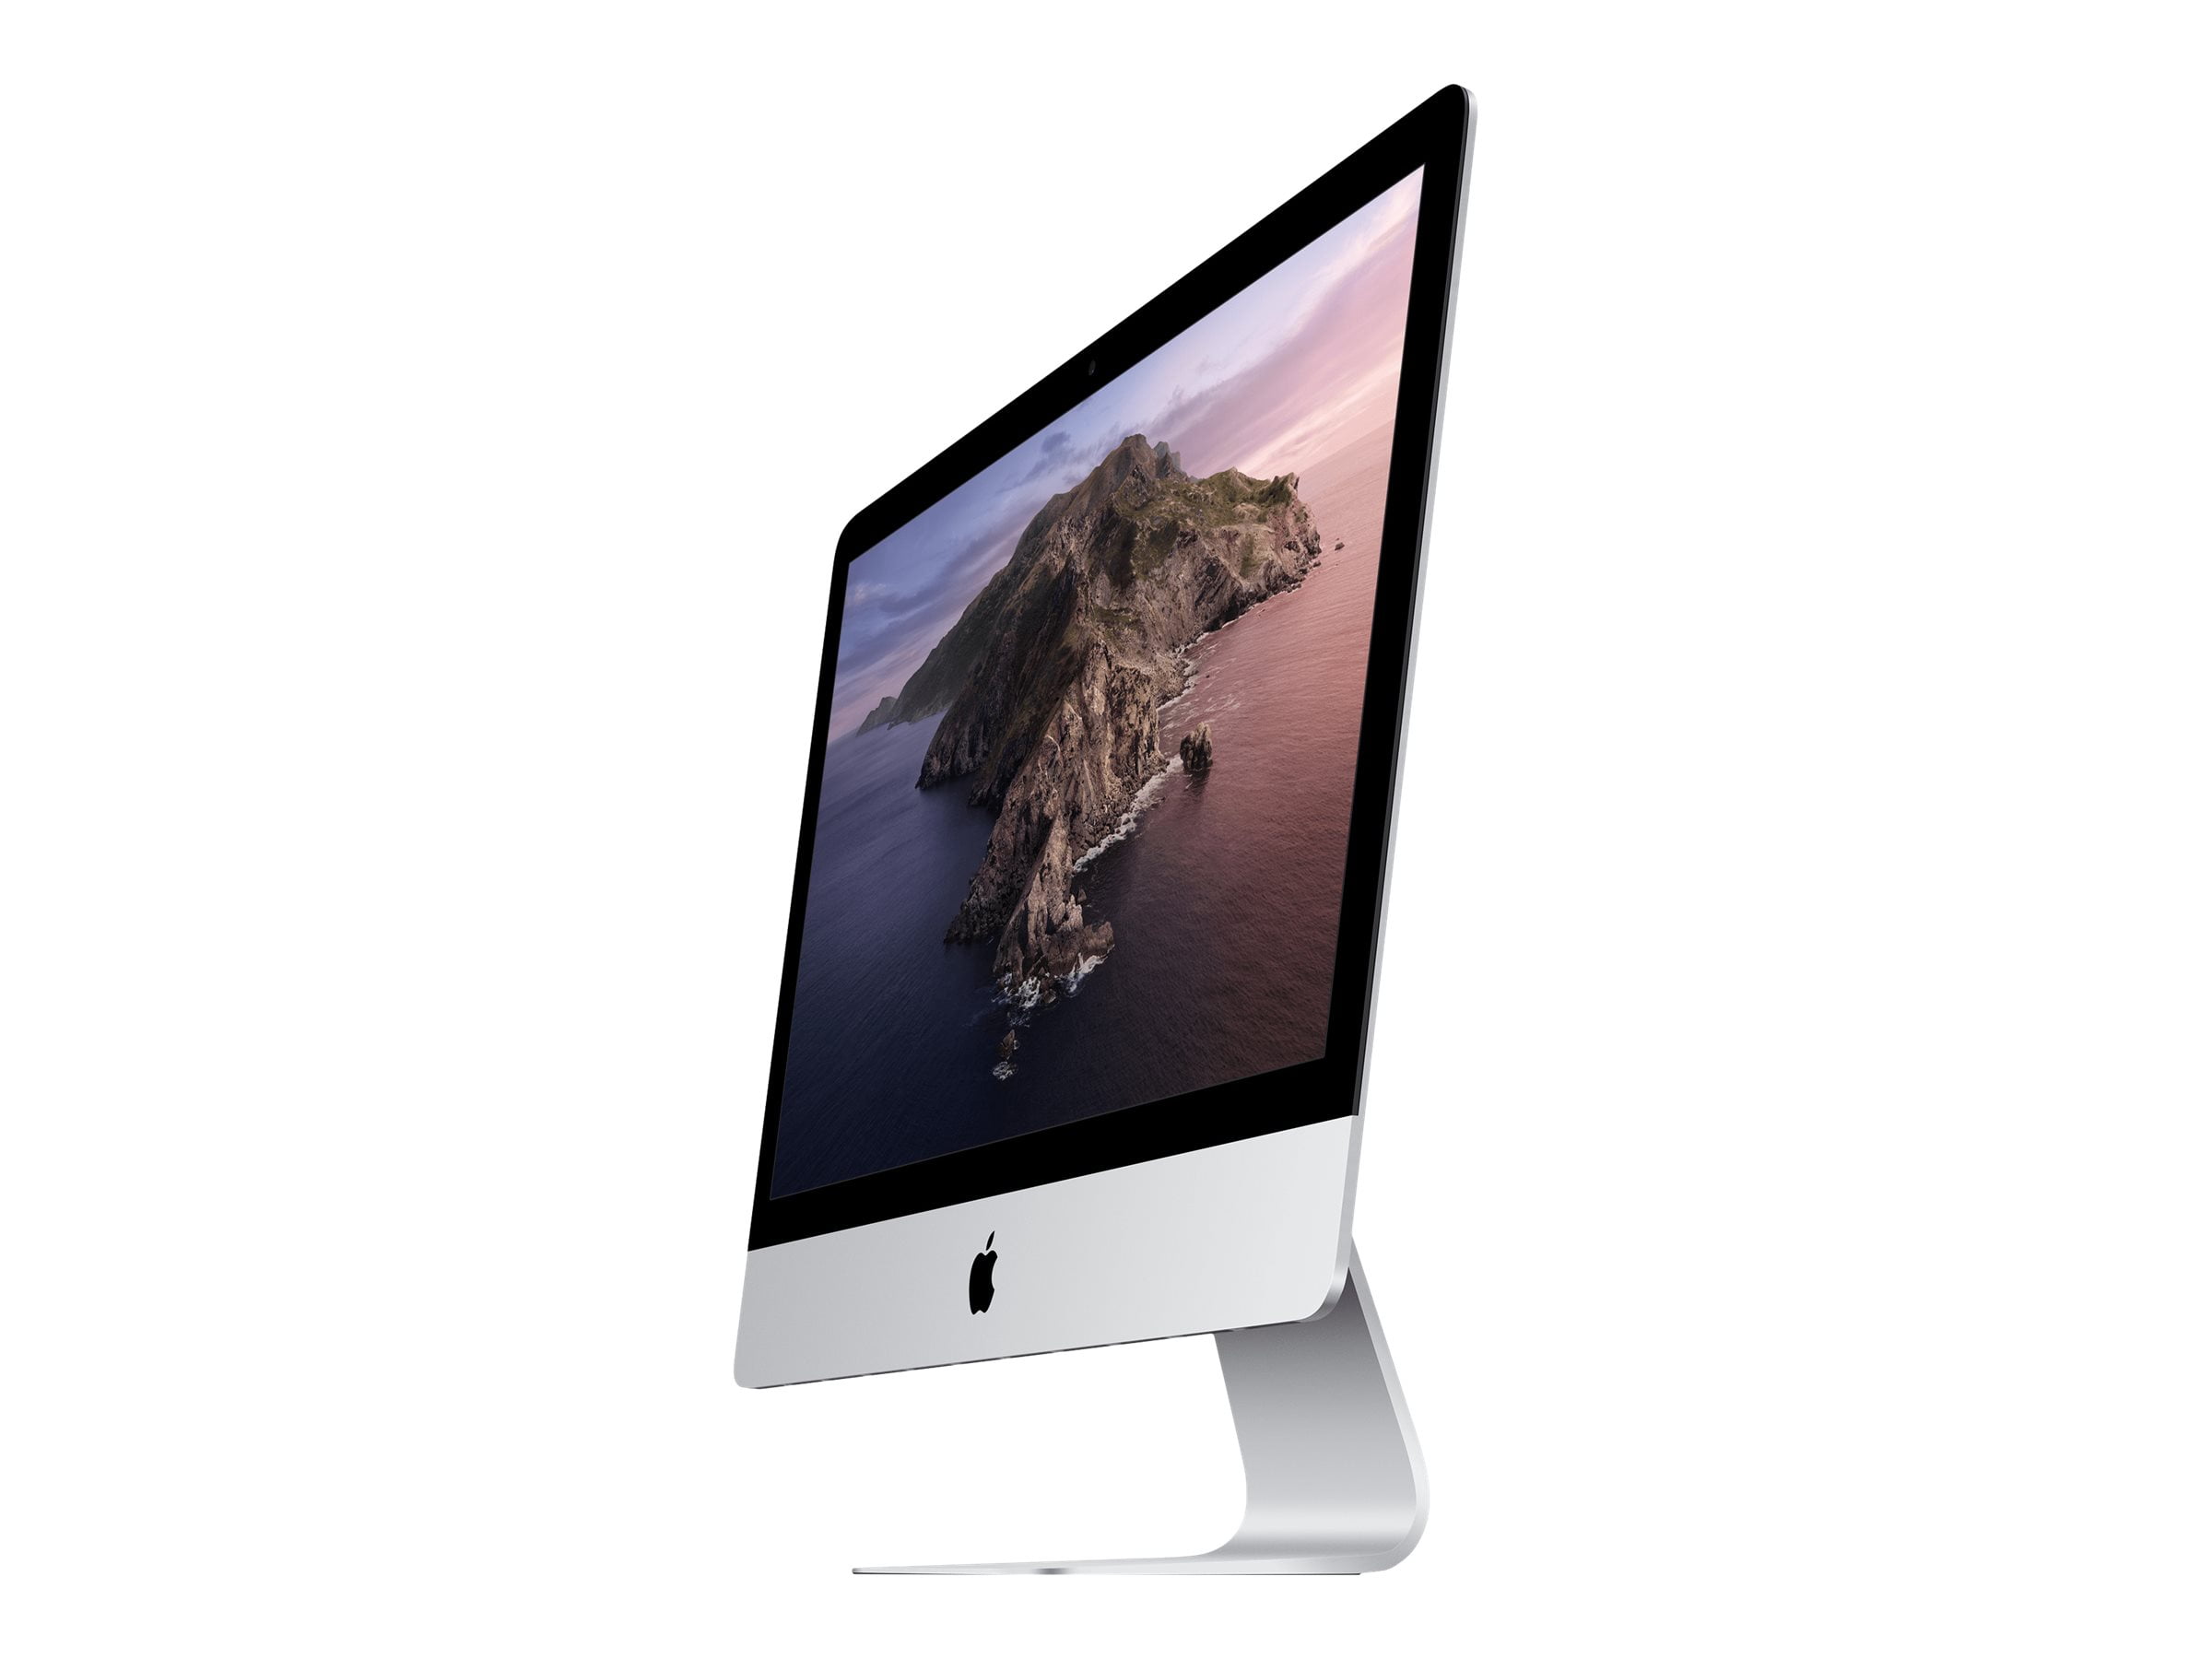 Apple iMac - All-in-one - Core i5 2.3 GHz RAM 8 GB - SSD 256 GB - Iris Pl - Walmart.com